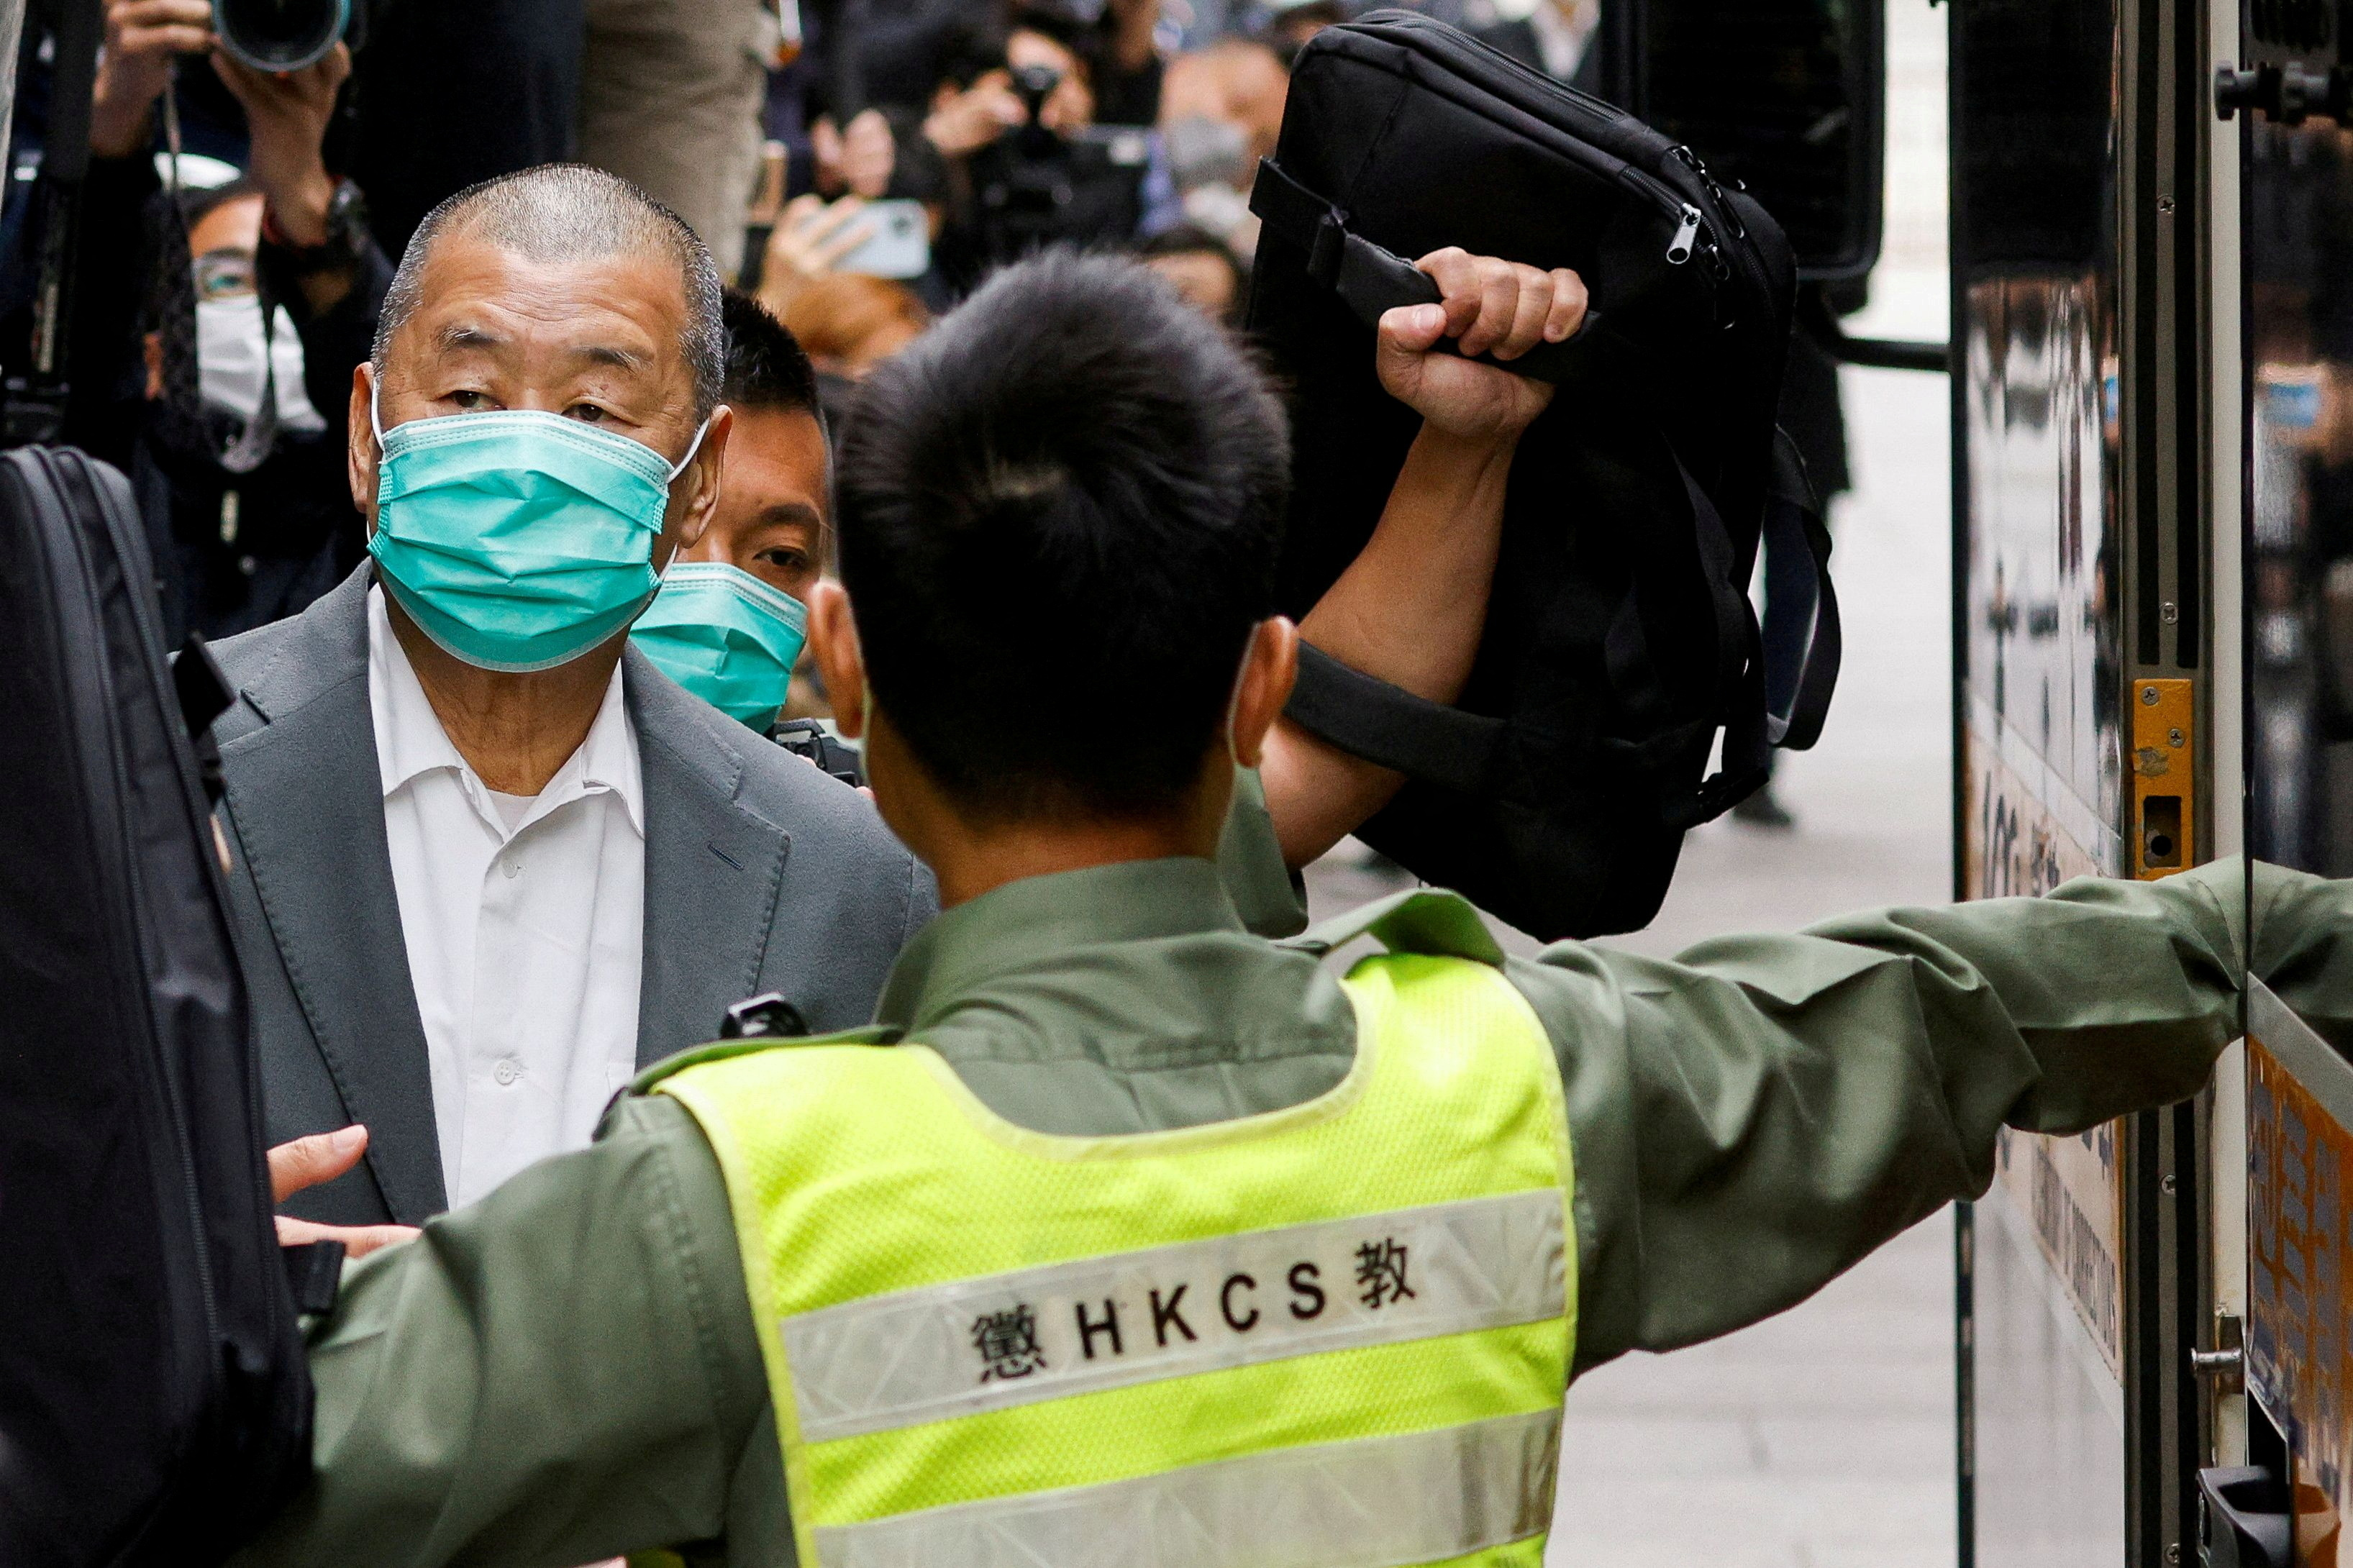 Media mogul Jimmy Lai, founder of Apple Daily, leaves Court of Final Appeal in Hong Kong via jail van